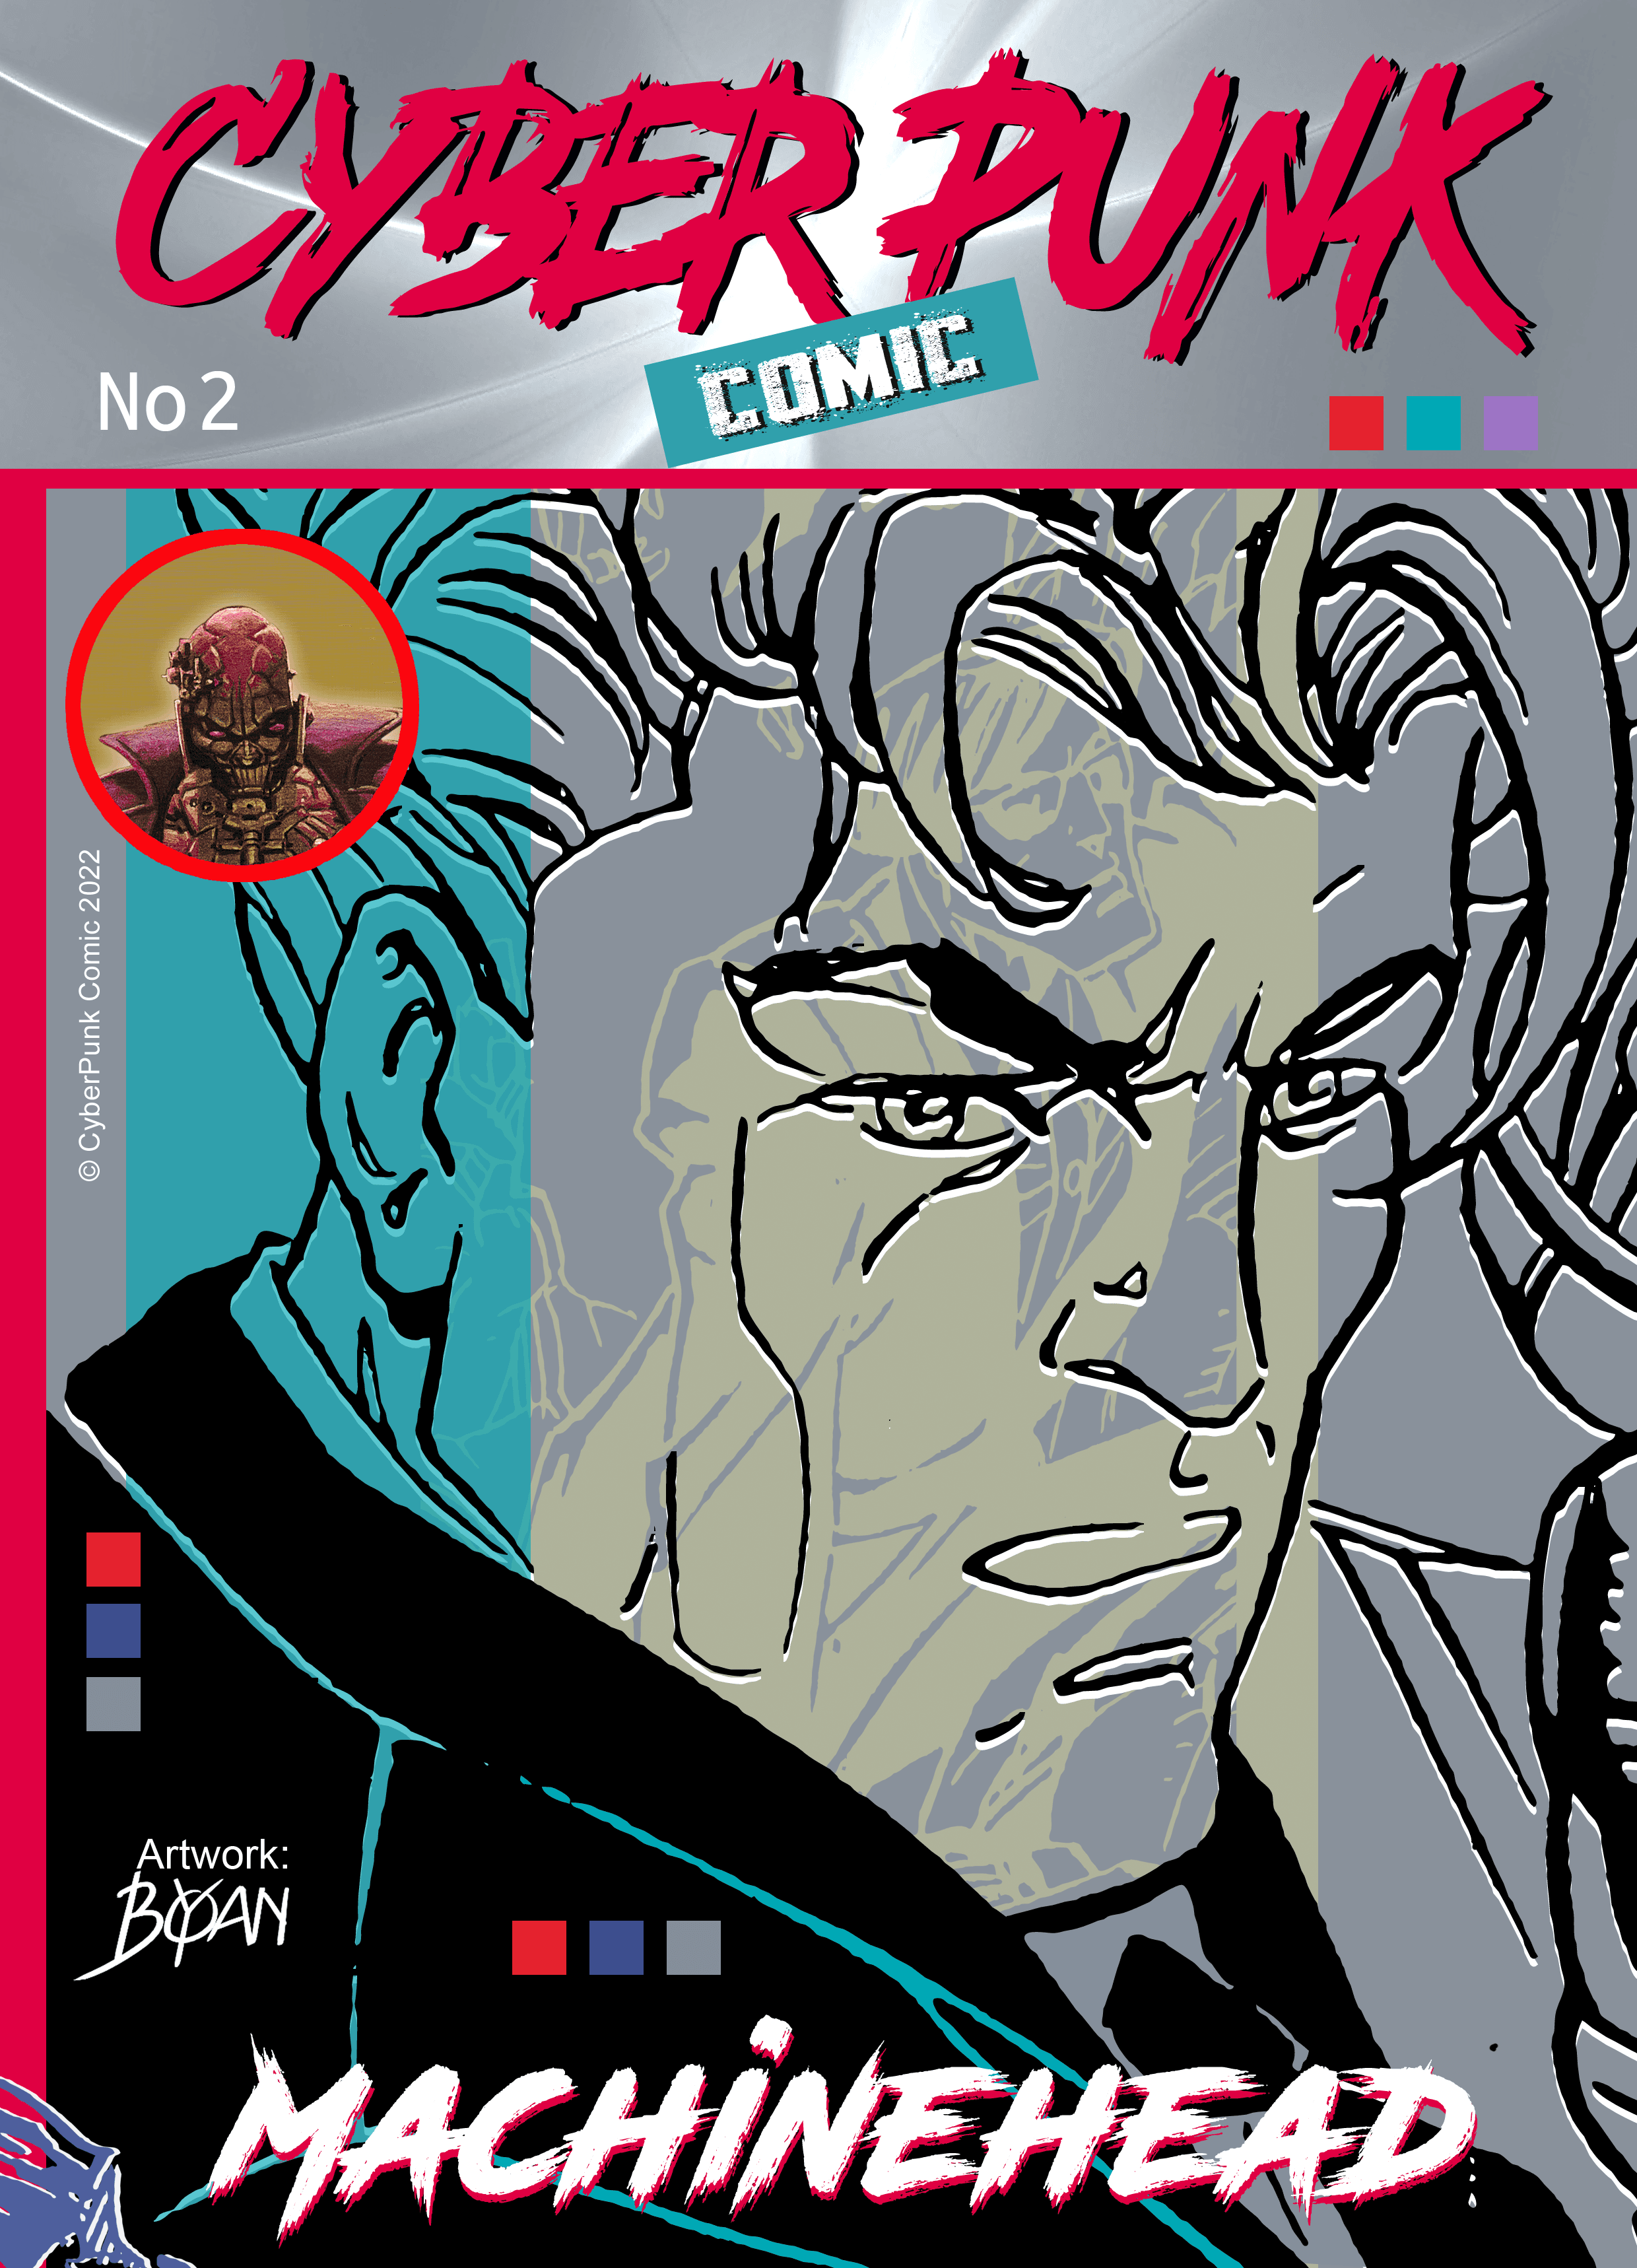 CyberPunk Comic Issue 2 #00592